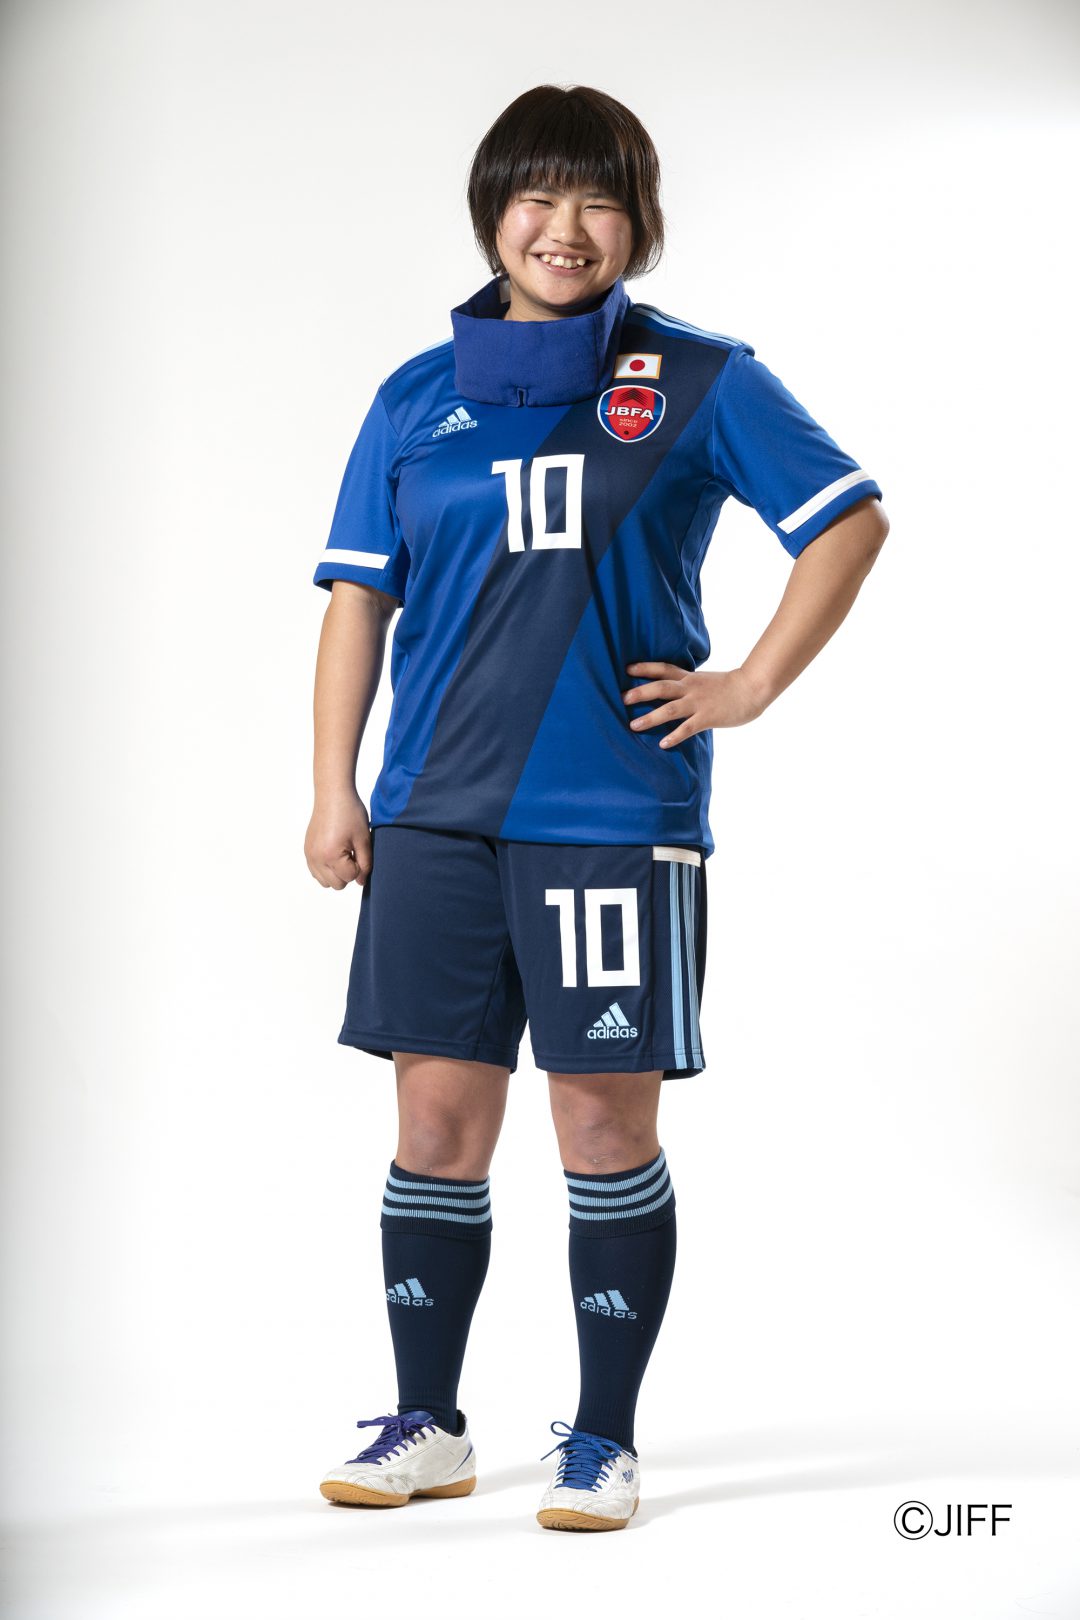 JIFF - [メディアリリース]障がい者サッカー統一日本代表ユニフォームのデザインを刷新／2/22(土)ブラインドサッカー女子日本代表戦で初披露